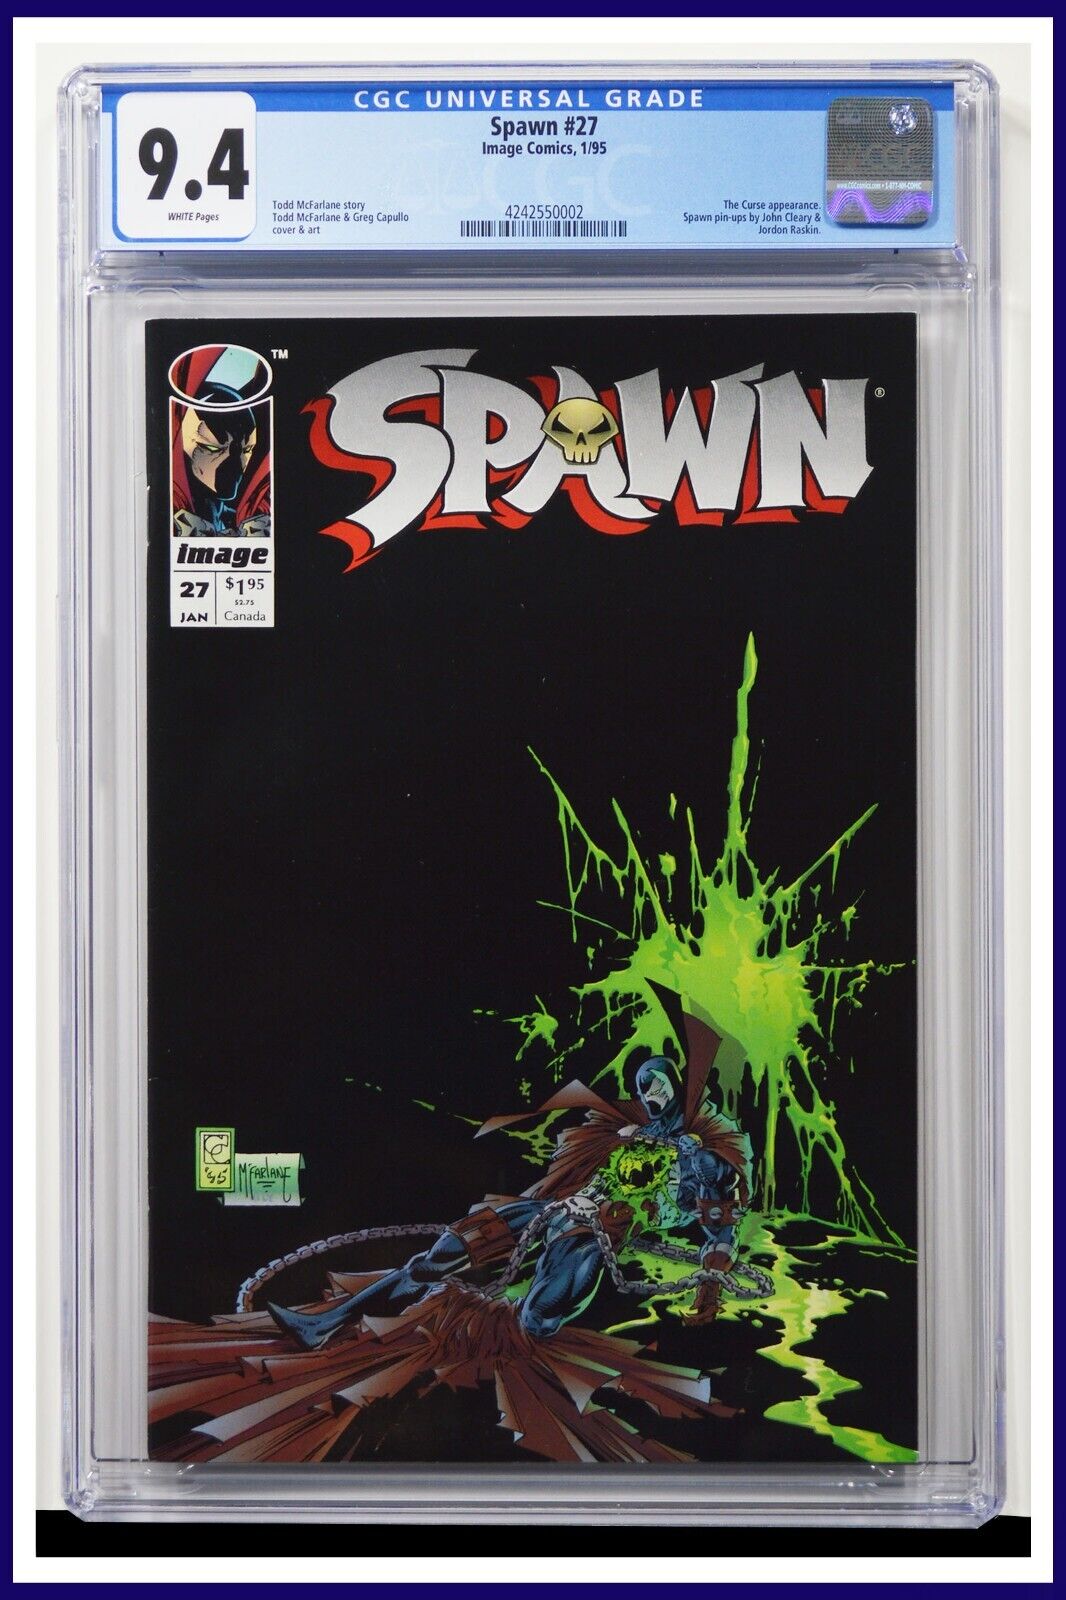 Spawn #27 CGC Graded 9.4 Image 1995 Todd McFarlane & Greg Capullo Comic Book.